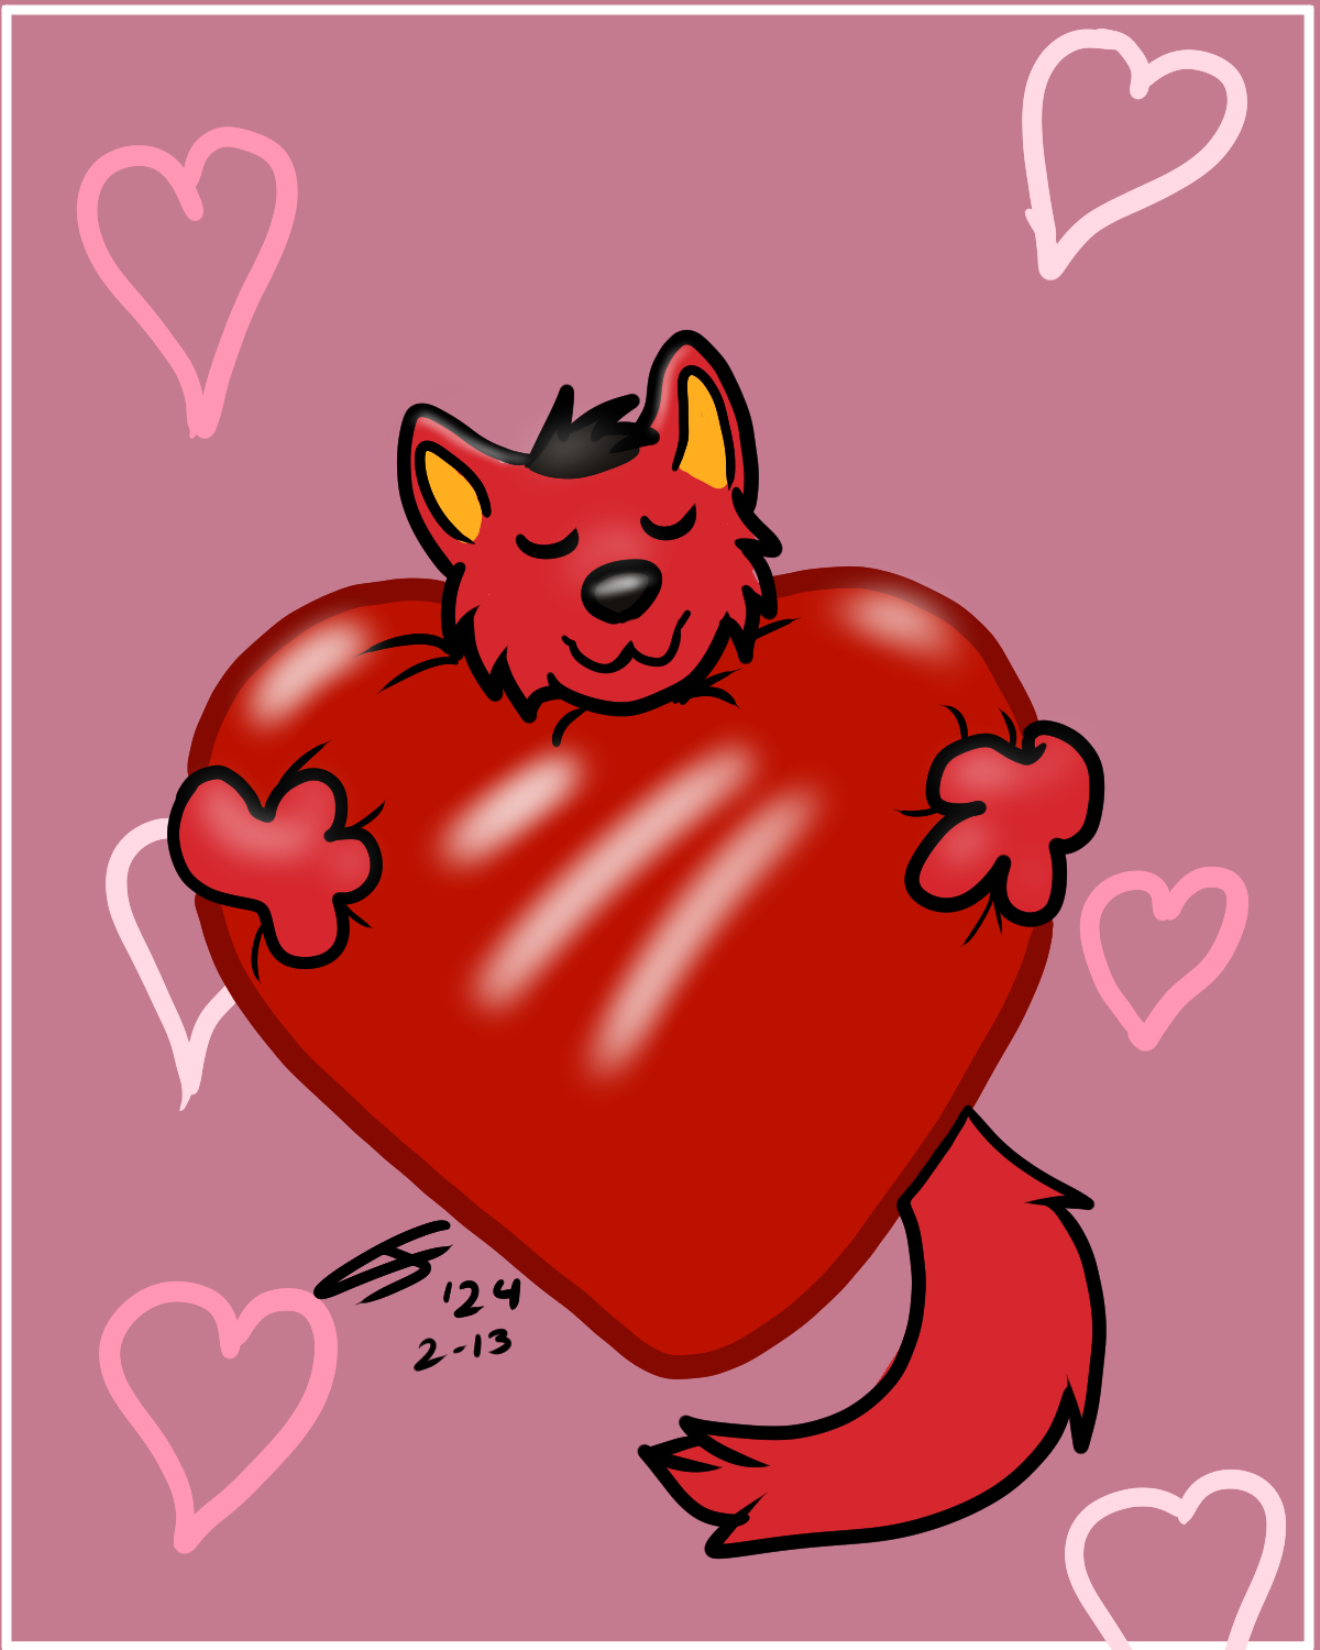 Heart Hugger (Majestic Red Wolf) by CJfauxx-luvs-transformers